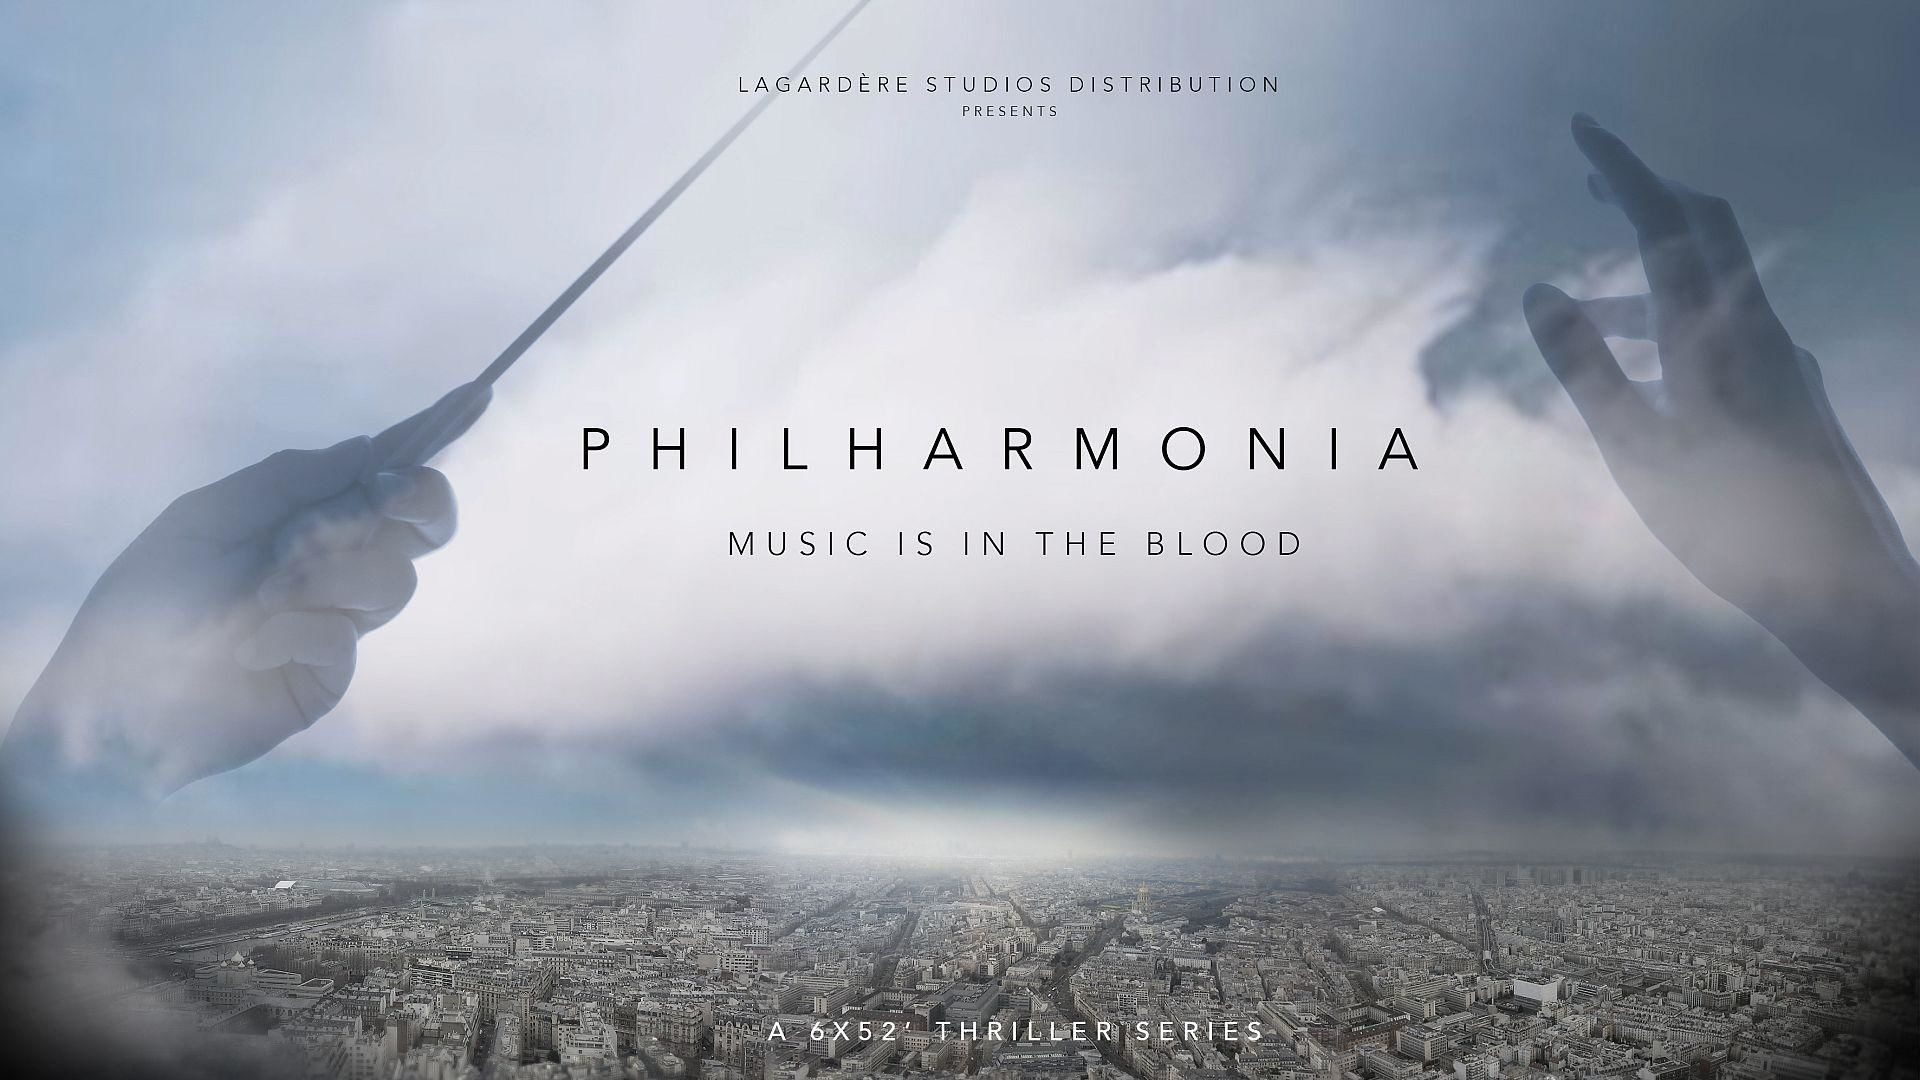 Show Philharmonia